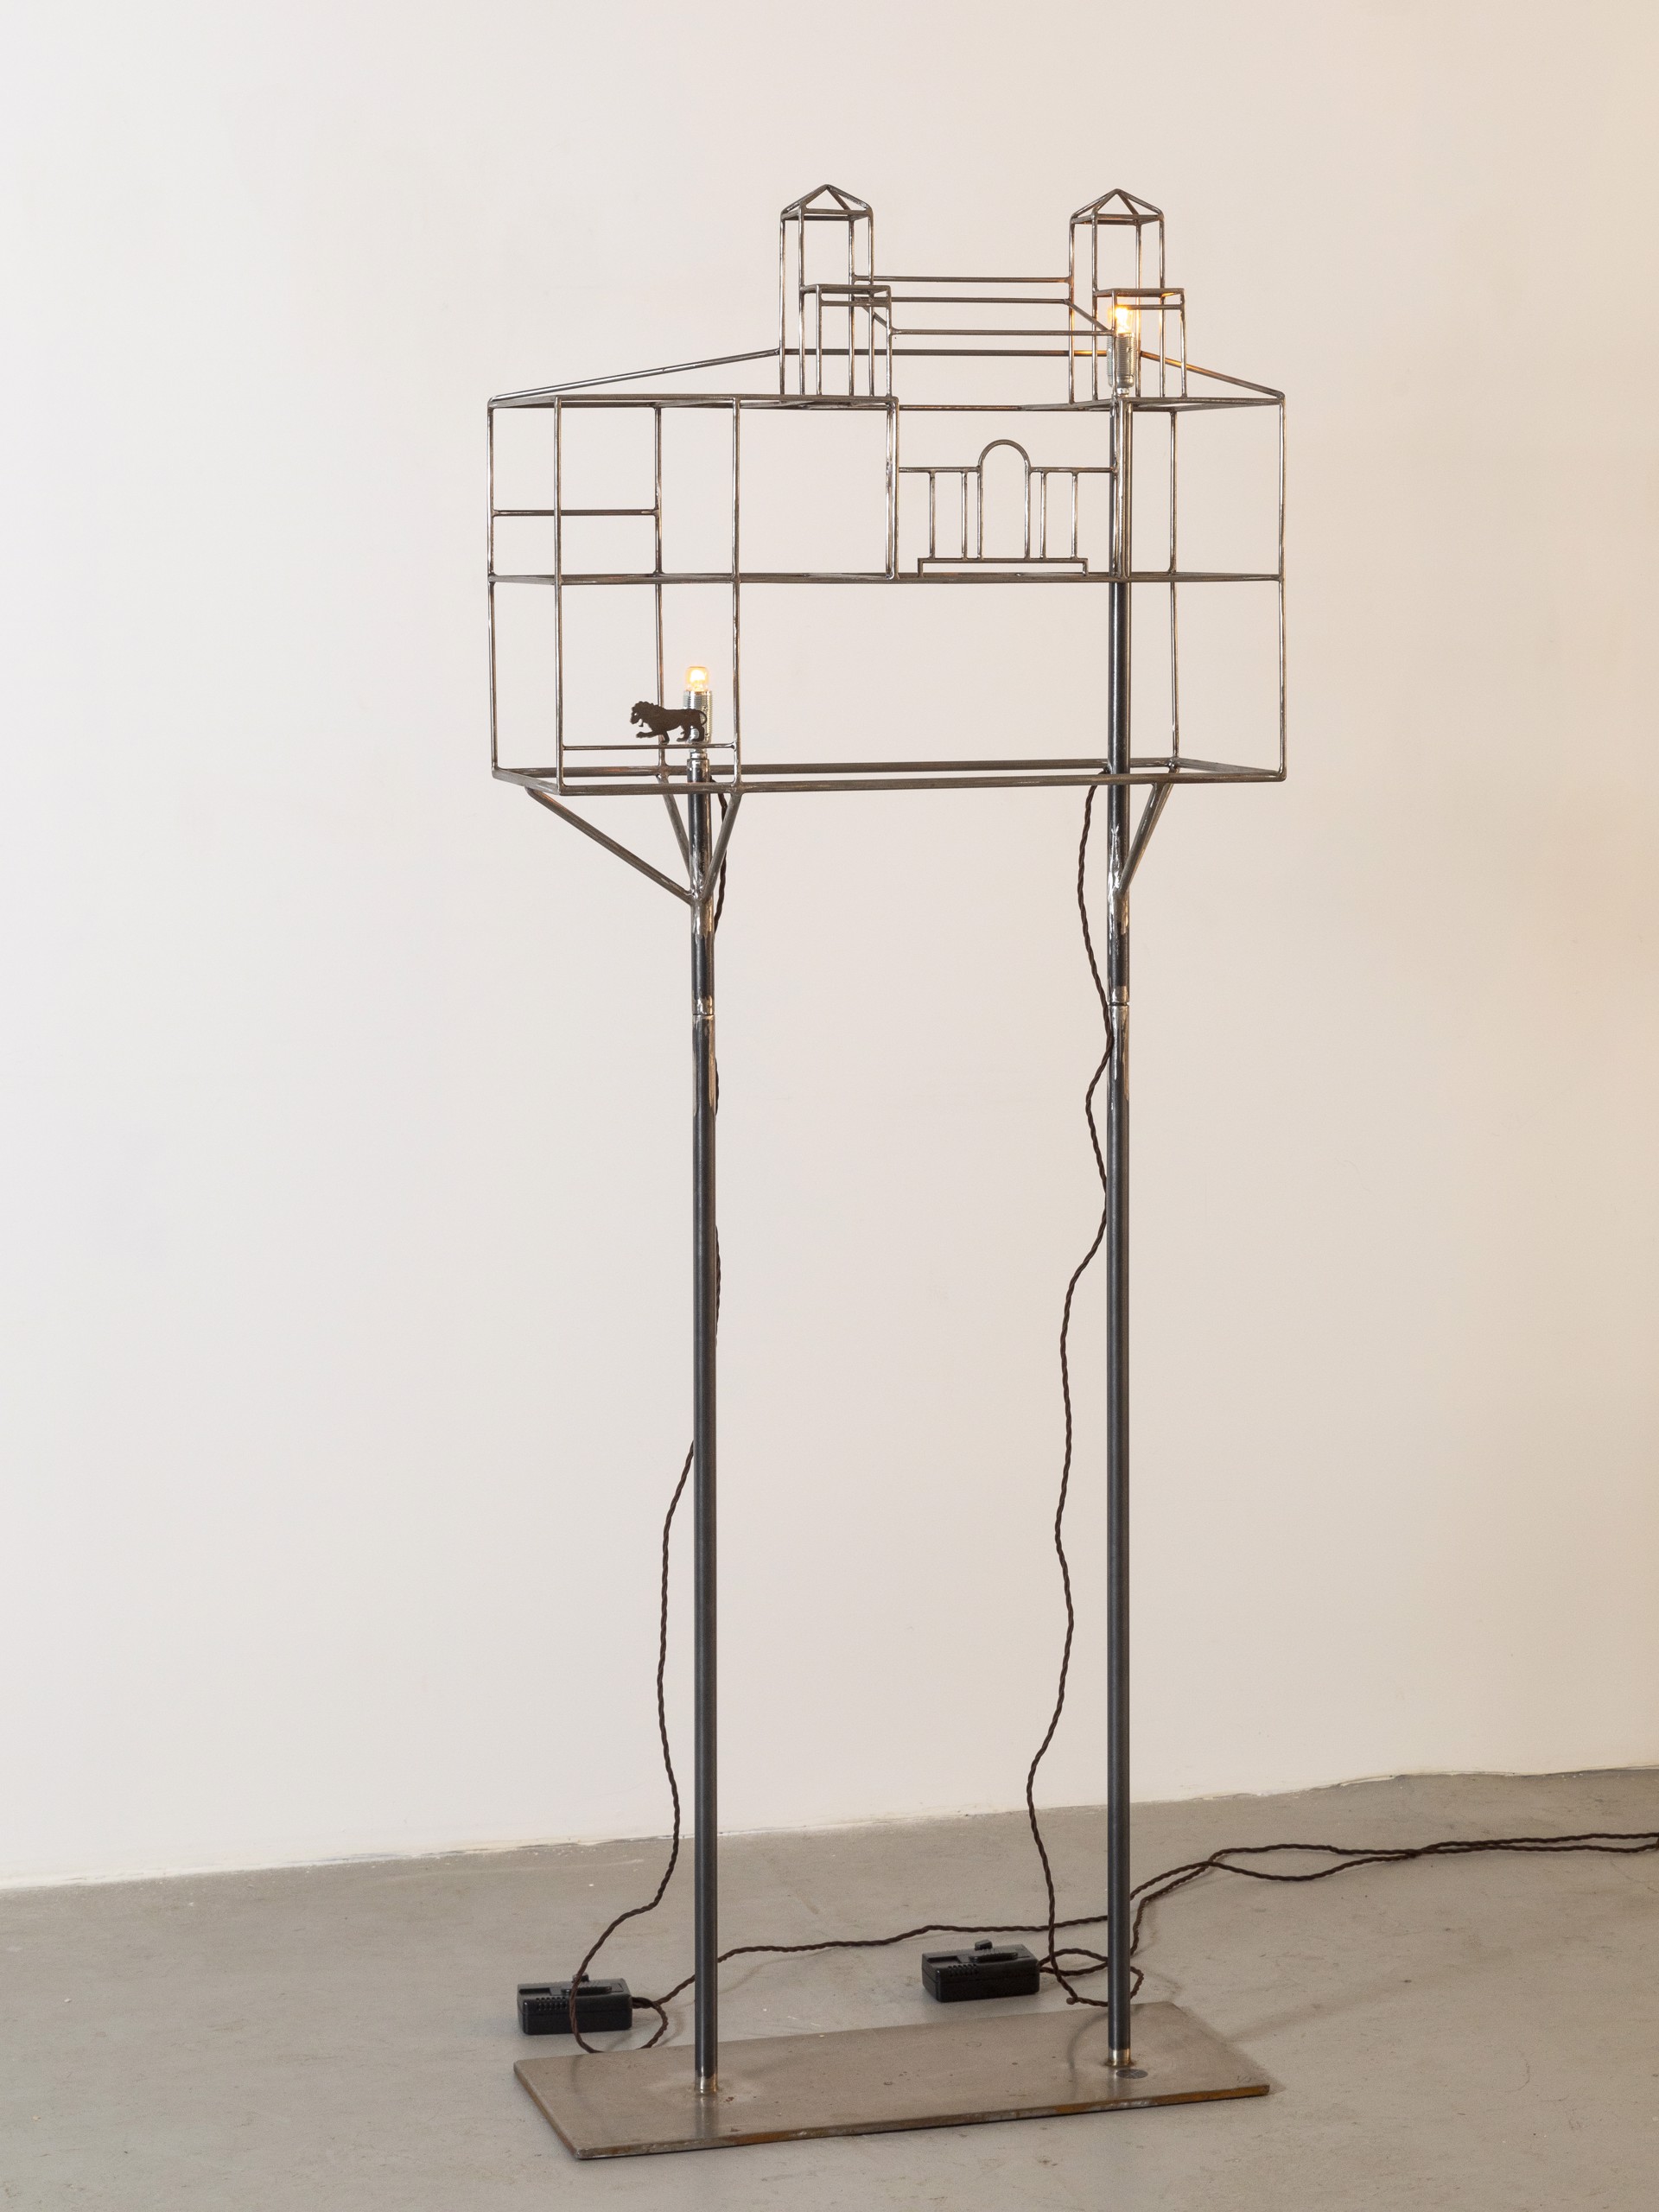 Floor Lamp "Medicis" by Benoit Maire